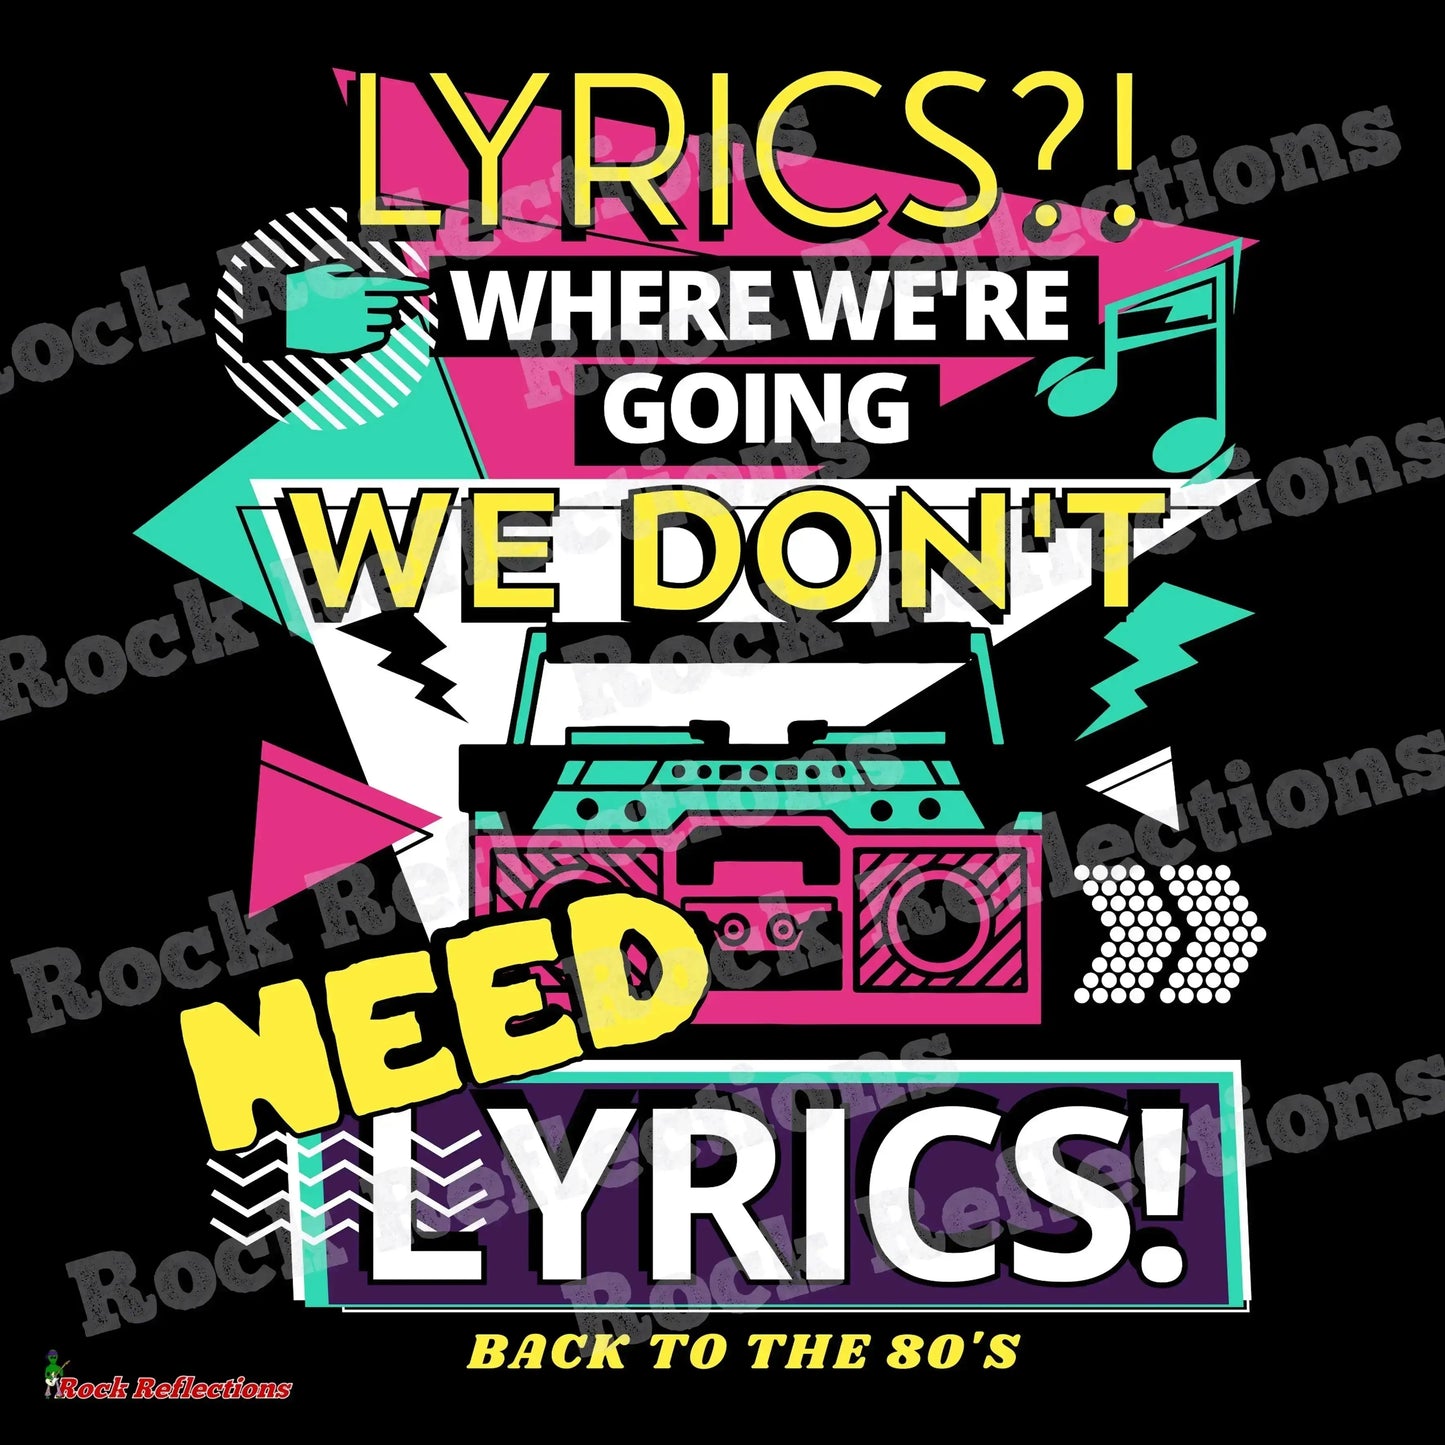 Don't Need Lyrics T-Shirt SPOD